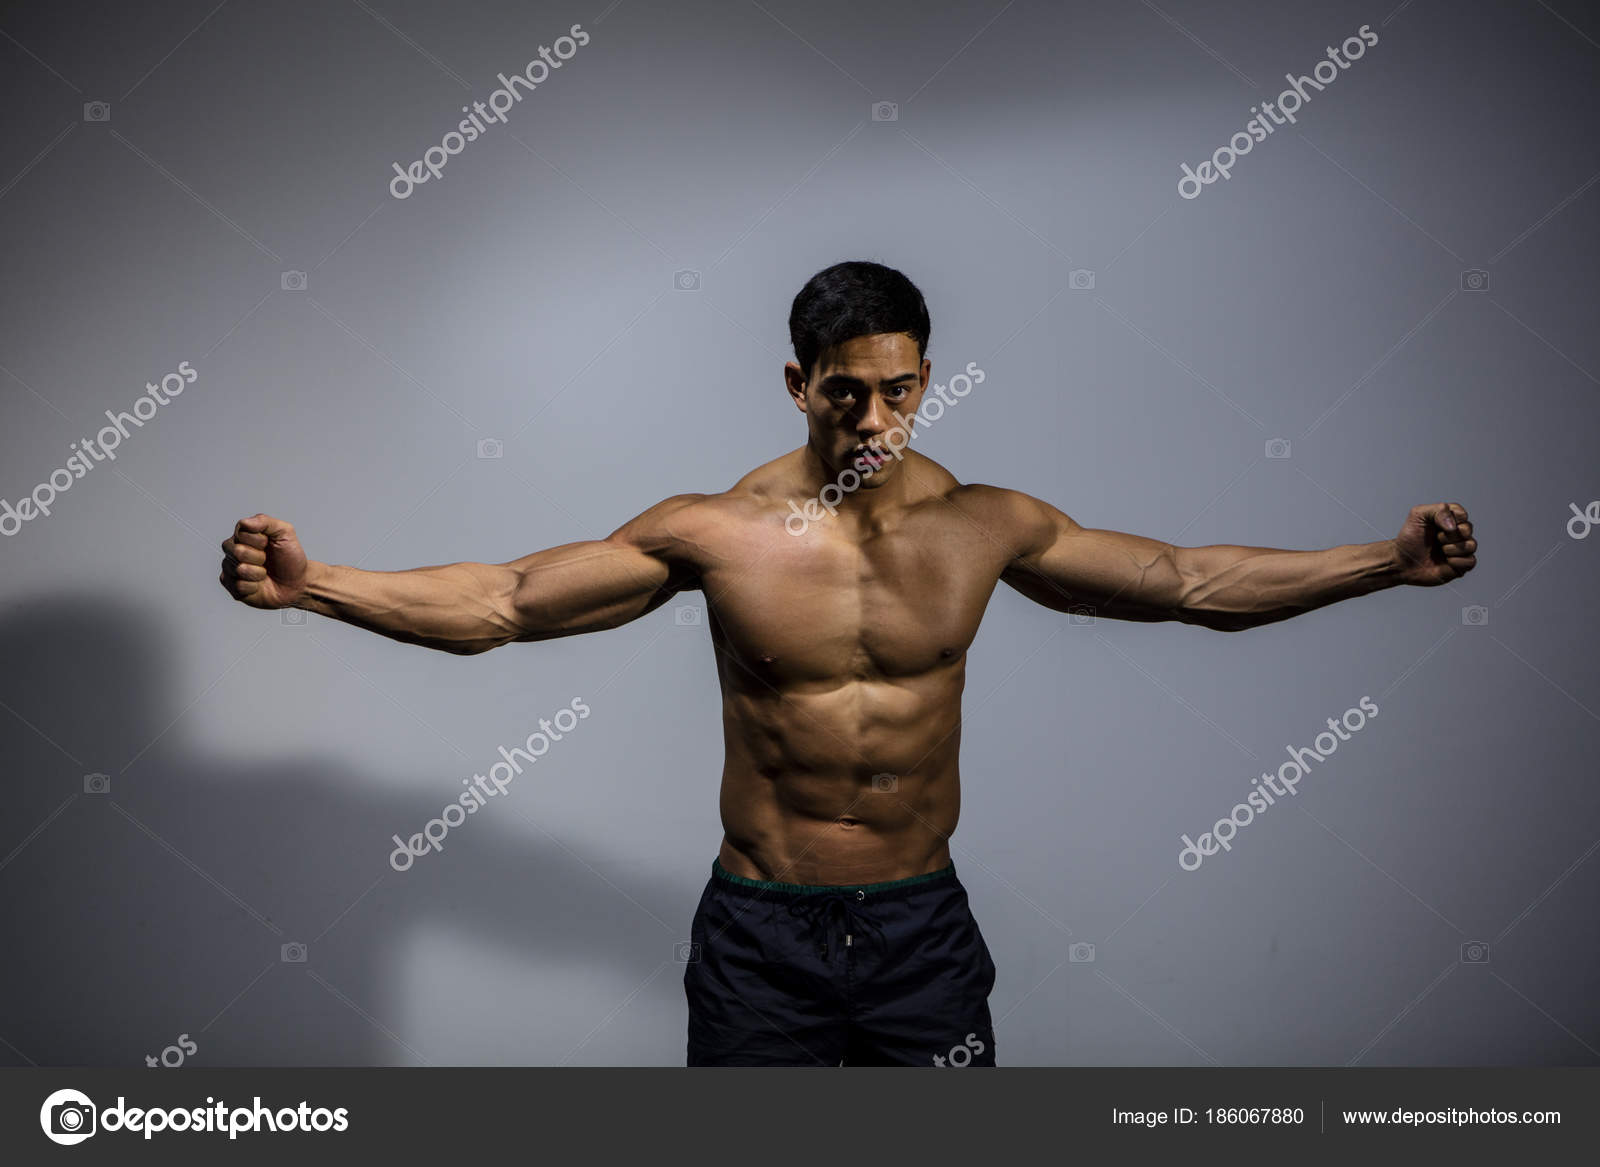 https://st3.depositphotos.com/2140881/18606/i/1600/depositphotos_186067880-stock-photo-fitness-model-displaying-biceps-and.jpg